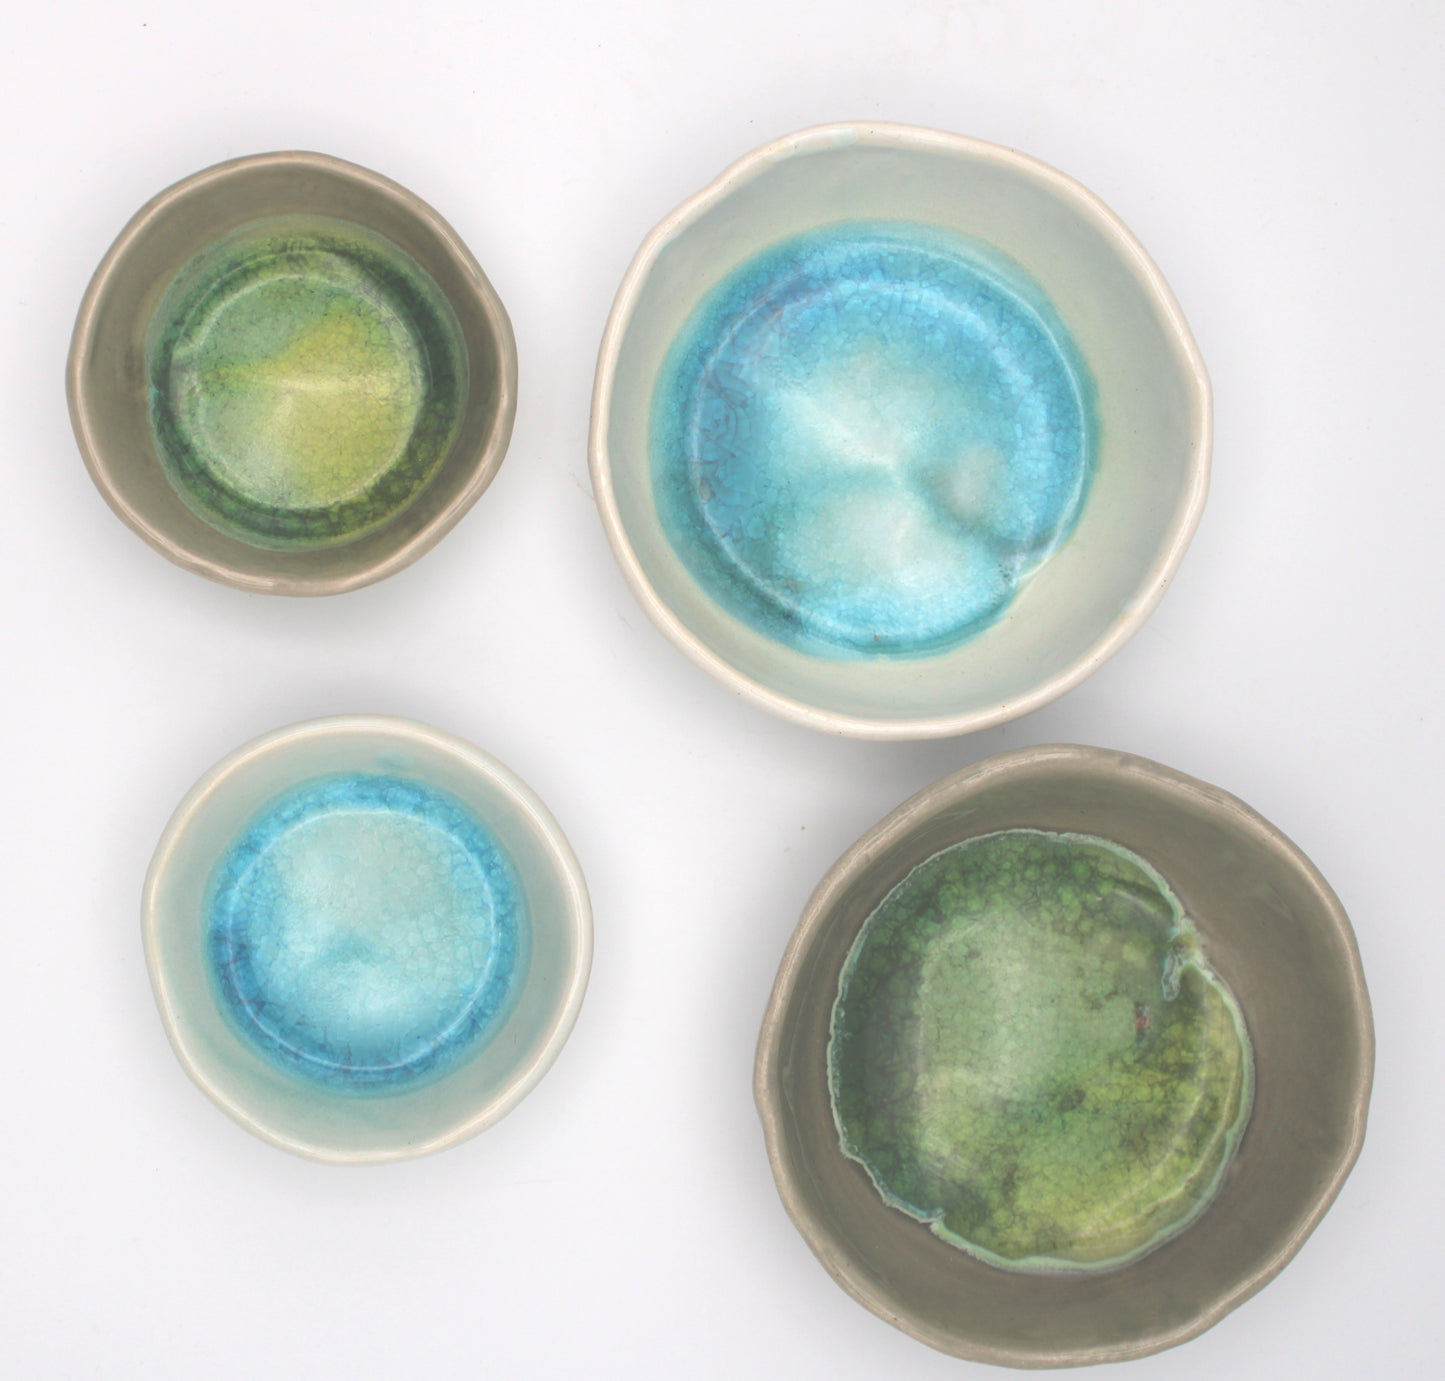 The Mood Designs Ceramic Bowls